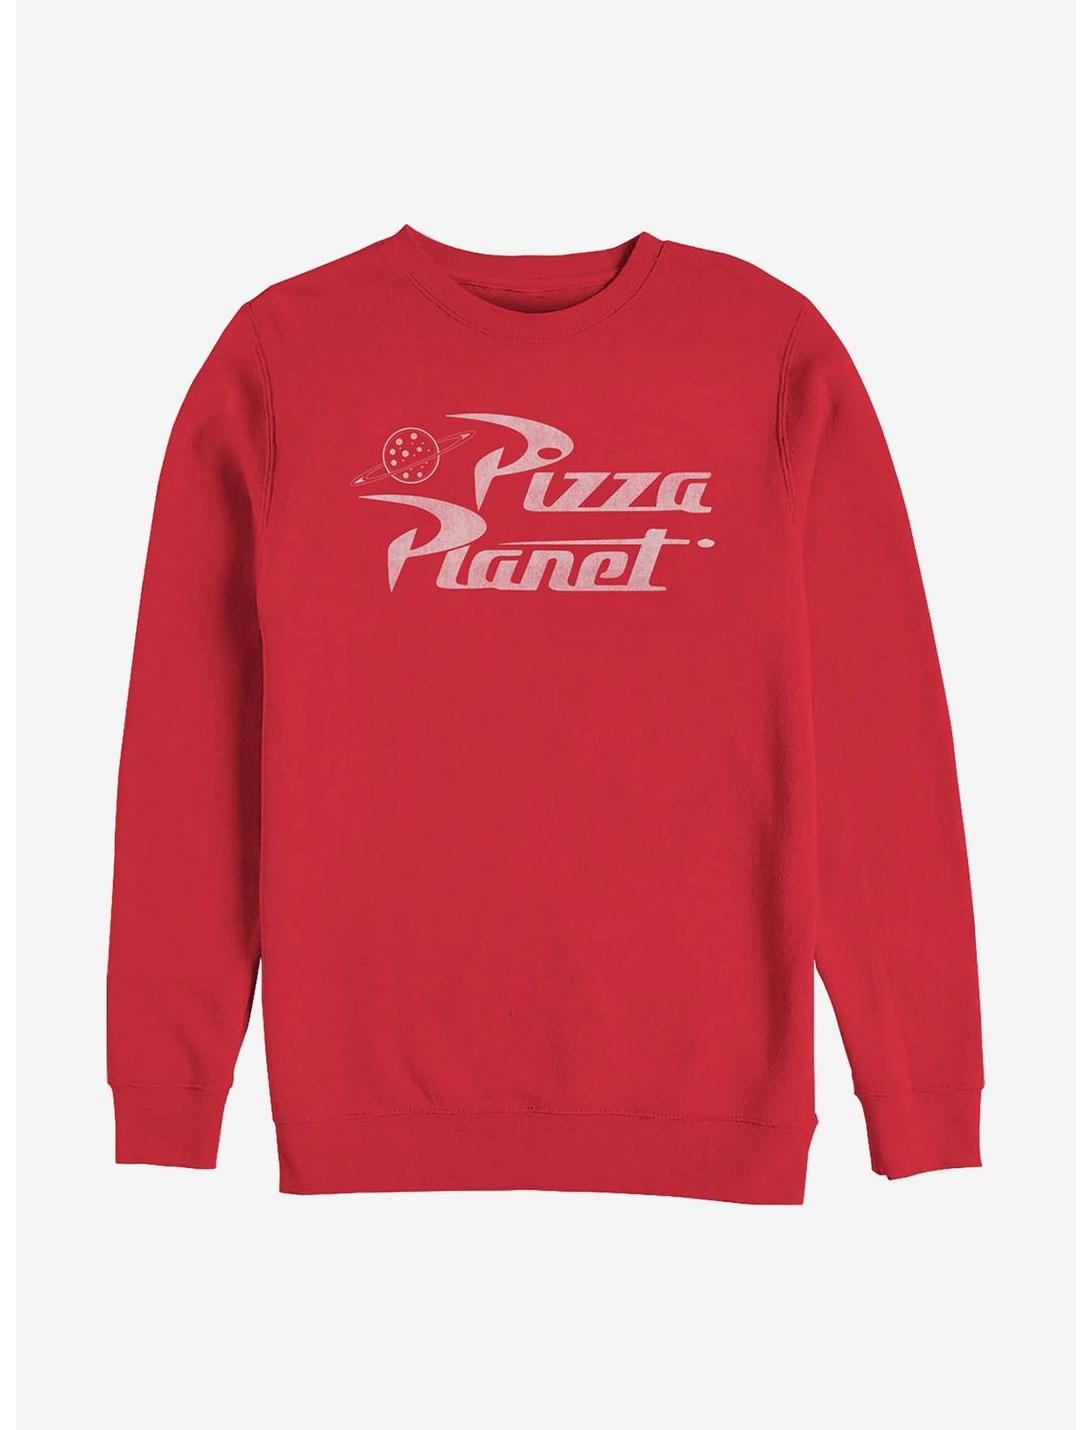 Disney Pixar Toy Story Pizza Planet Crew Sweatshirt, RED, hi-res